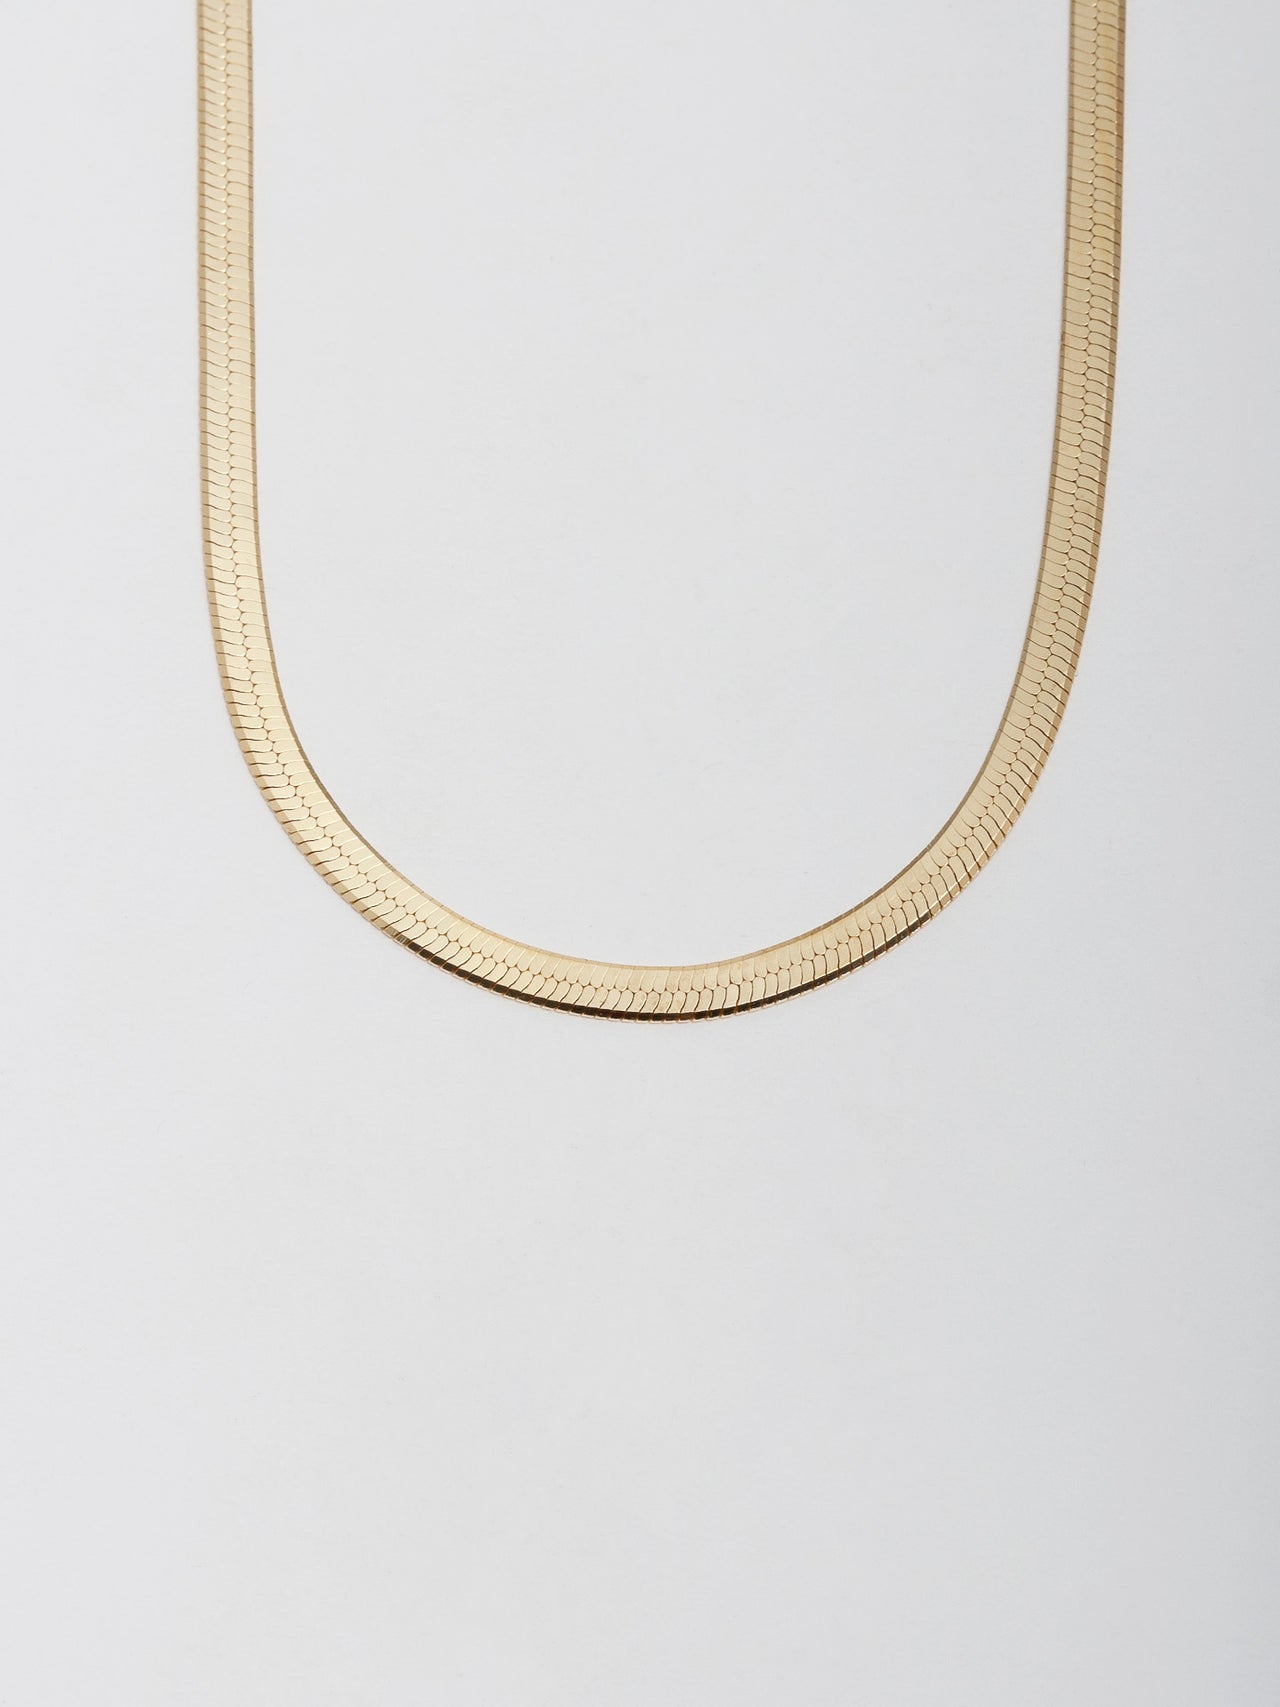 Men's Flat Herringbone Necklace Chain